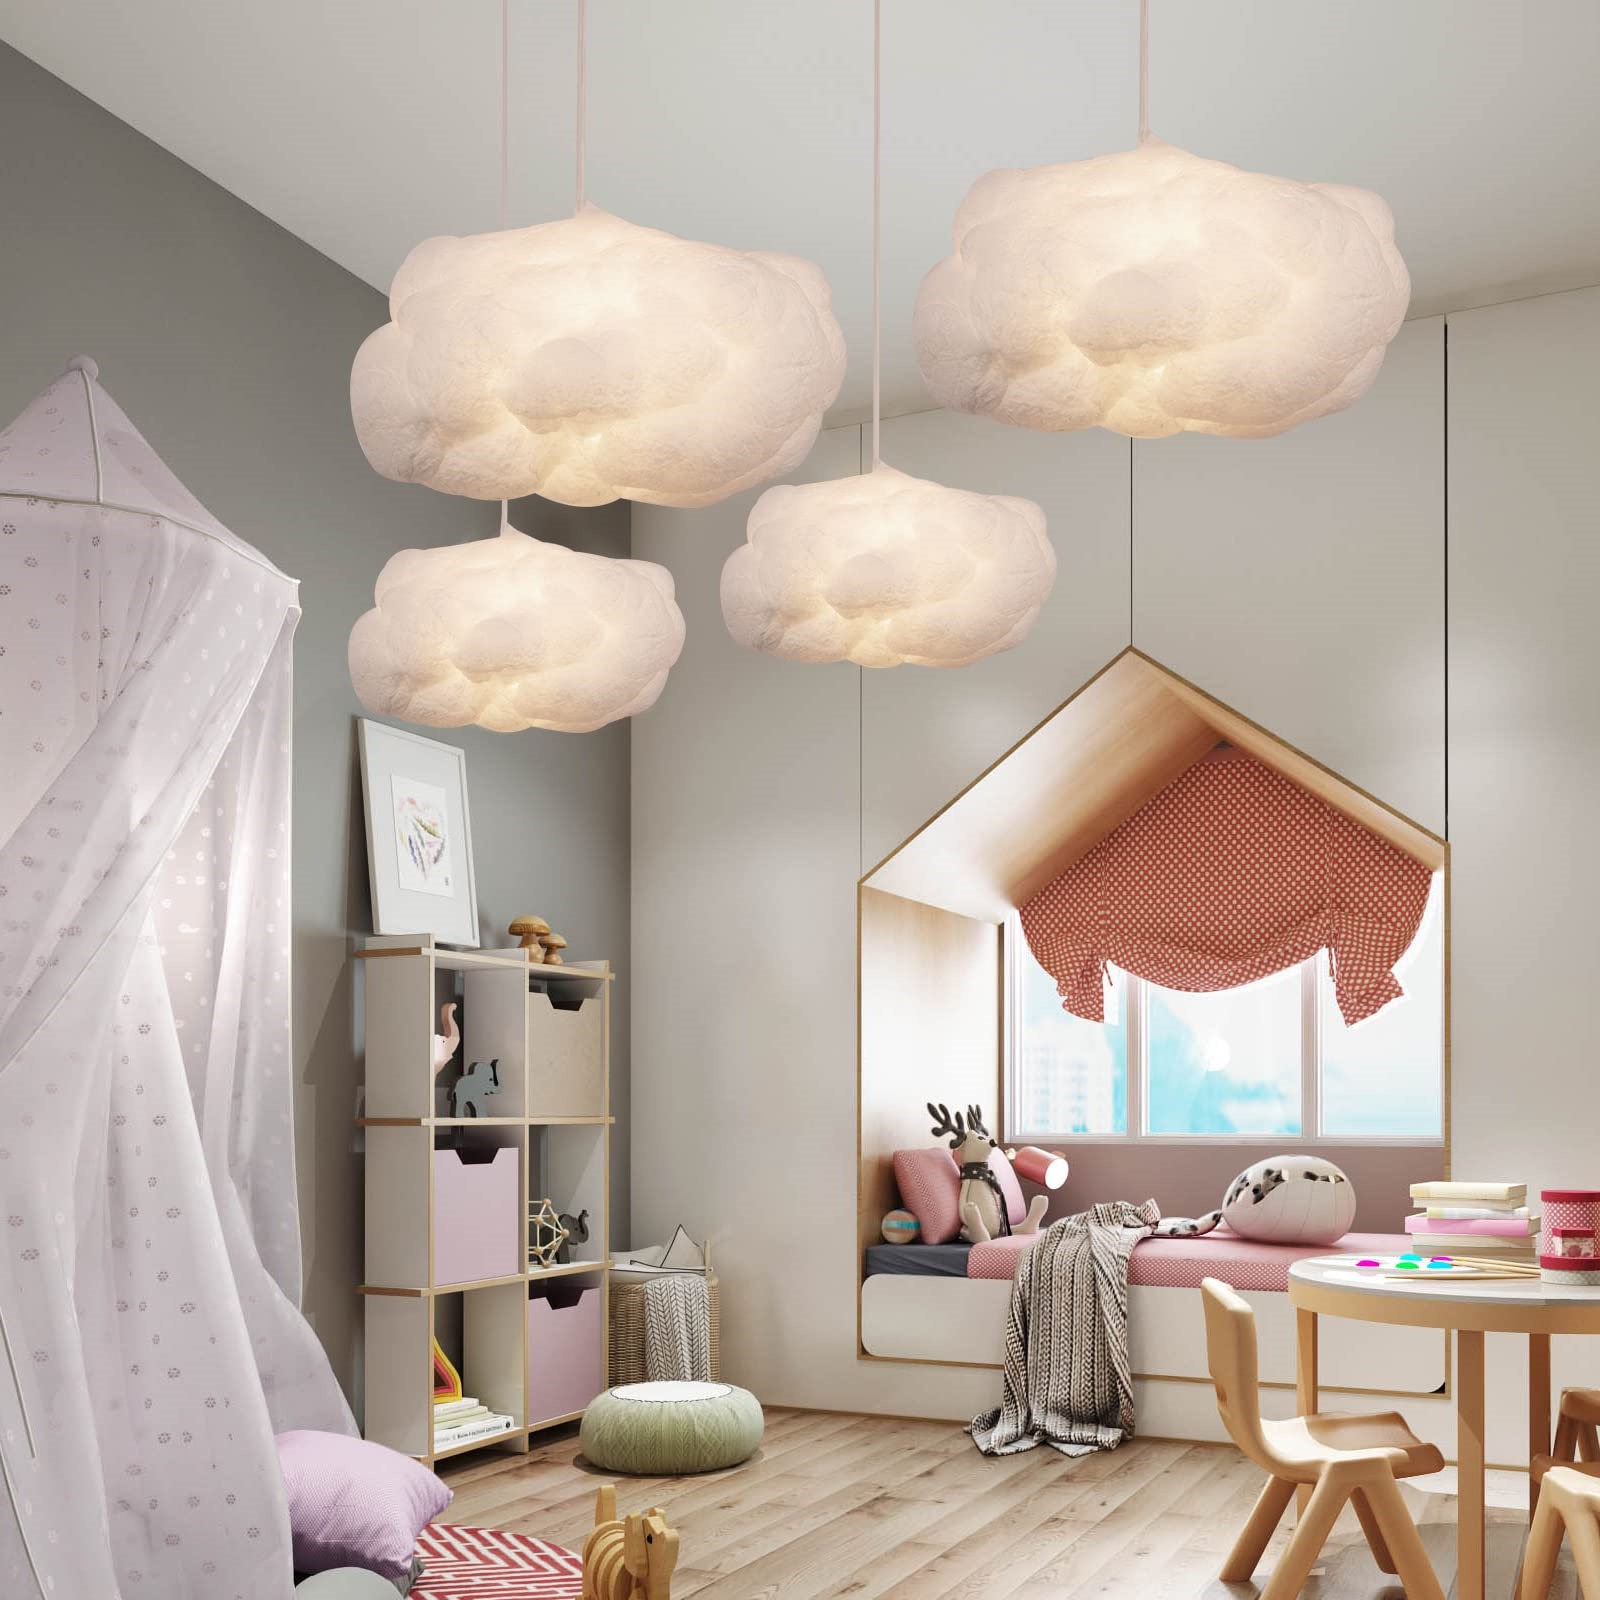 Nuage Led Plafond, Led Créative Coton Nuage Lampe, Dimmable,Diy